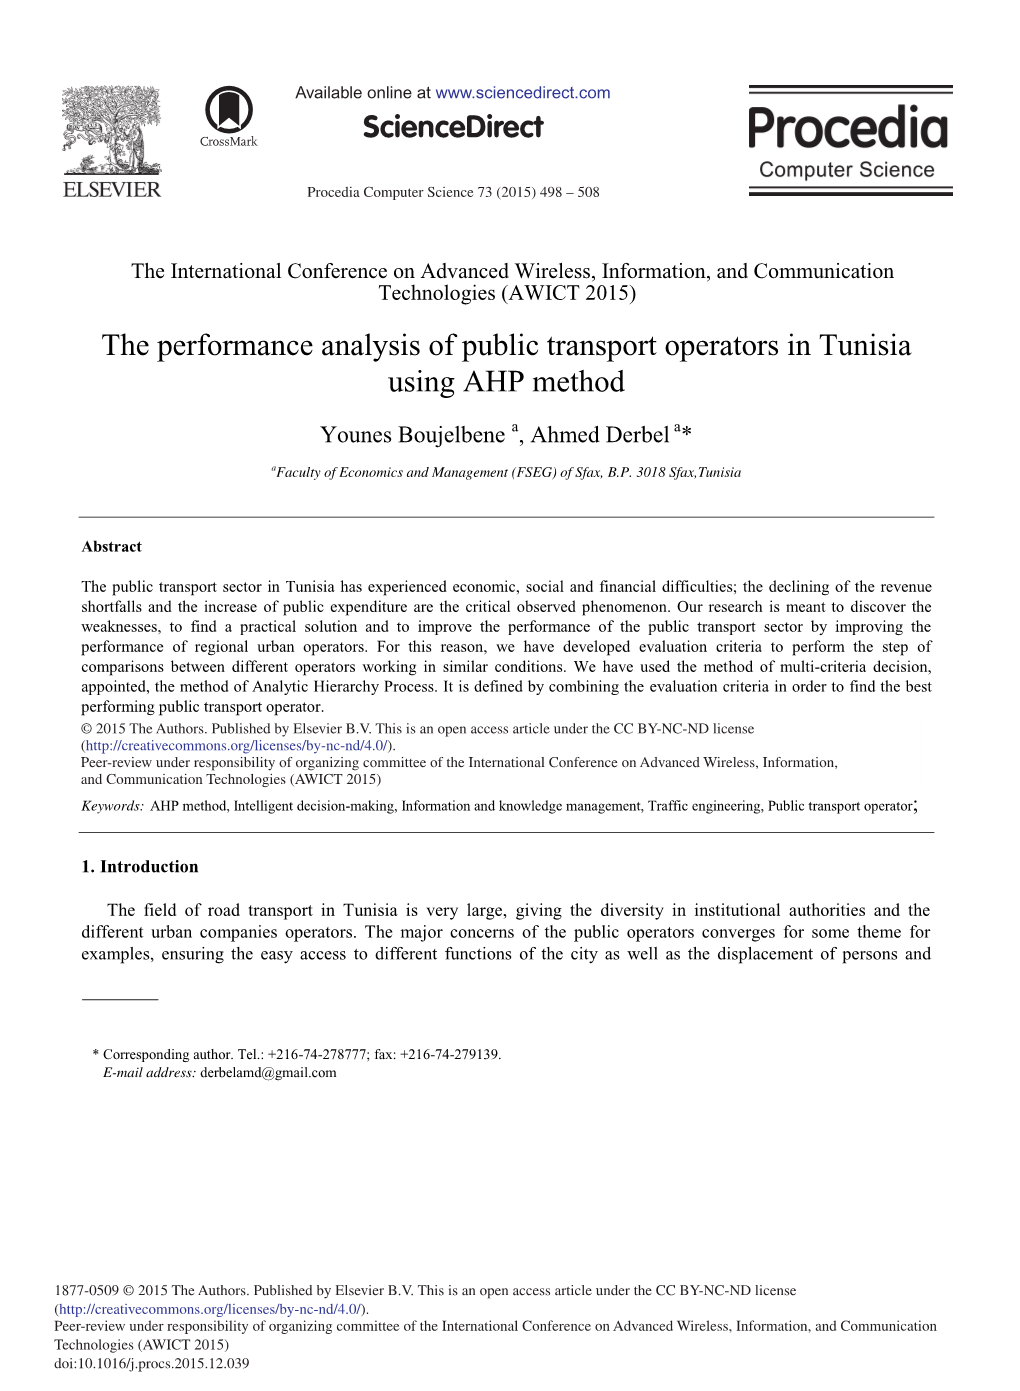 The Performance Analysis of Public Transport Operators in Tunisia Using AHP Method